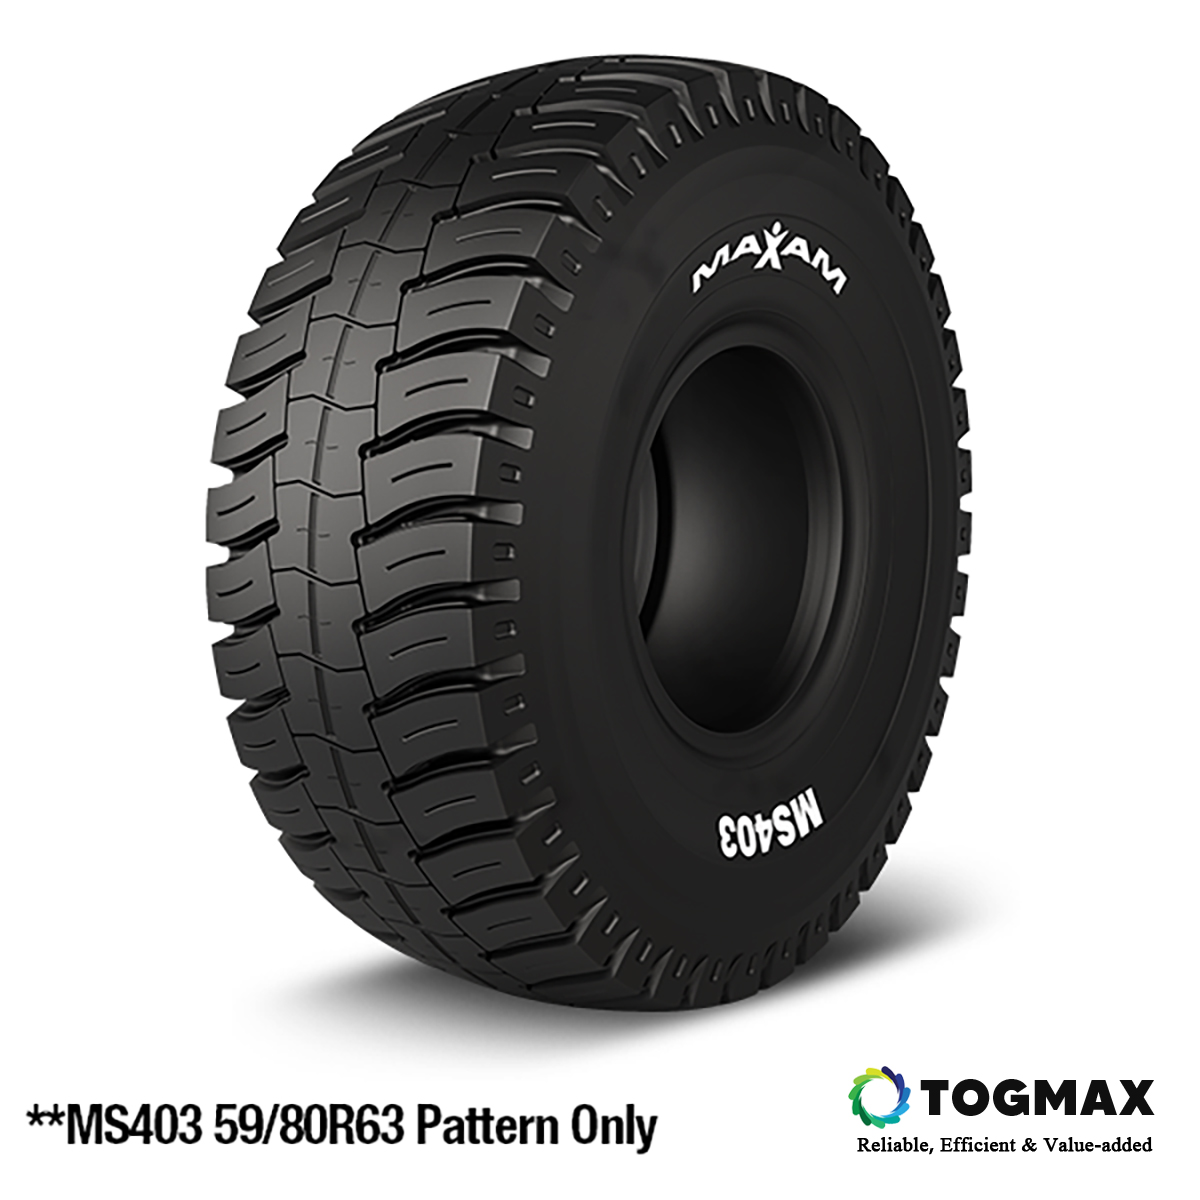 Maxam MS403 E4 Versatile Radial OTR Mining Truck Tires 59/80R63